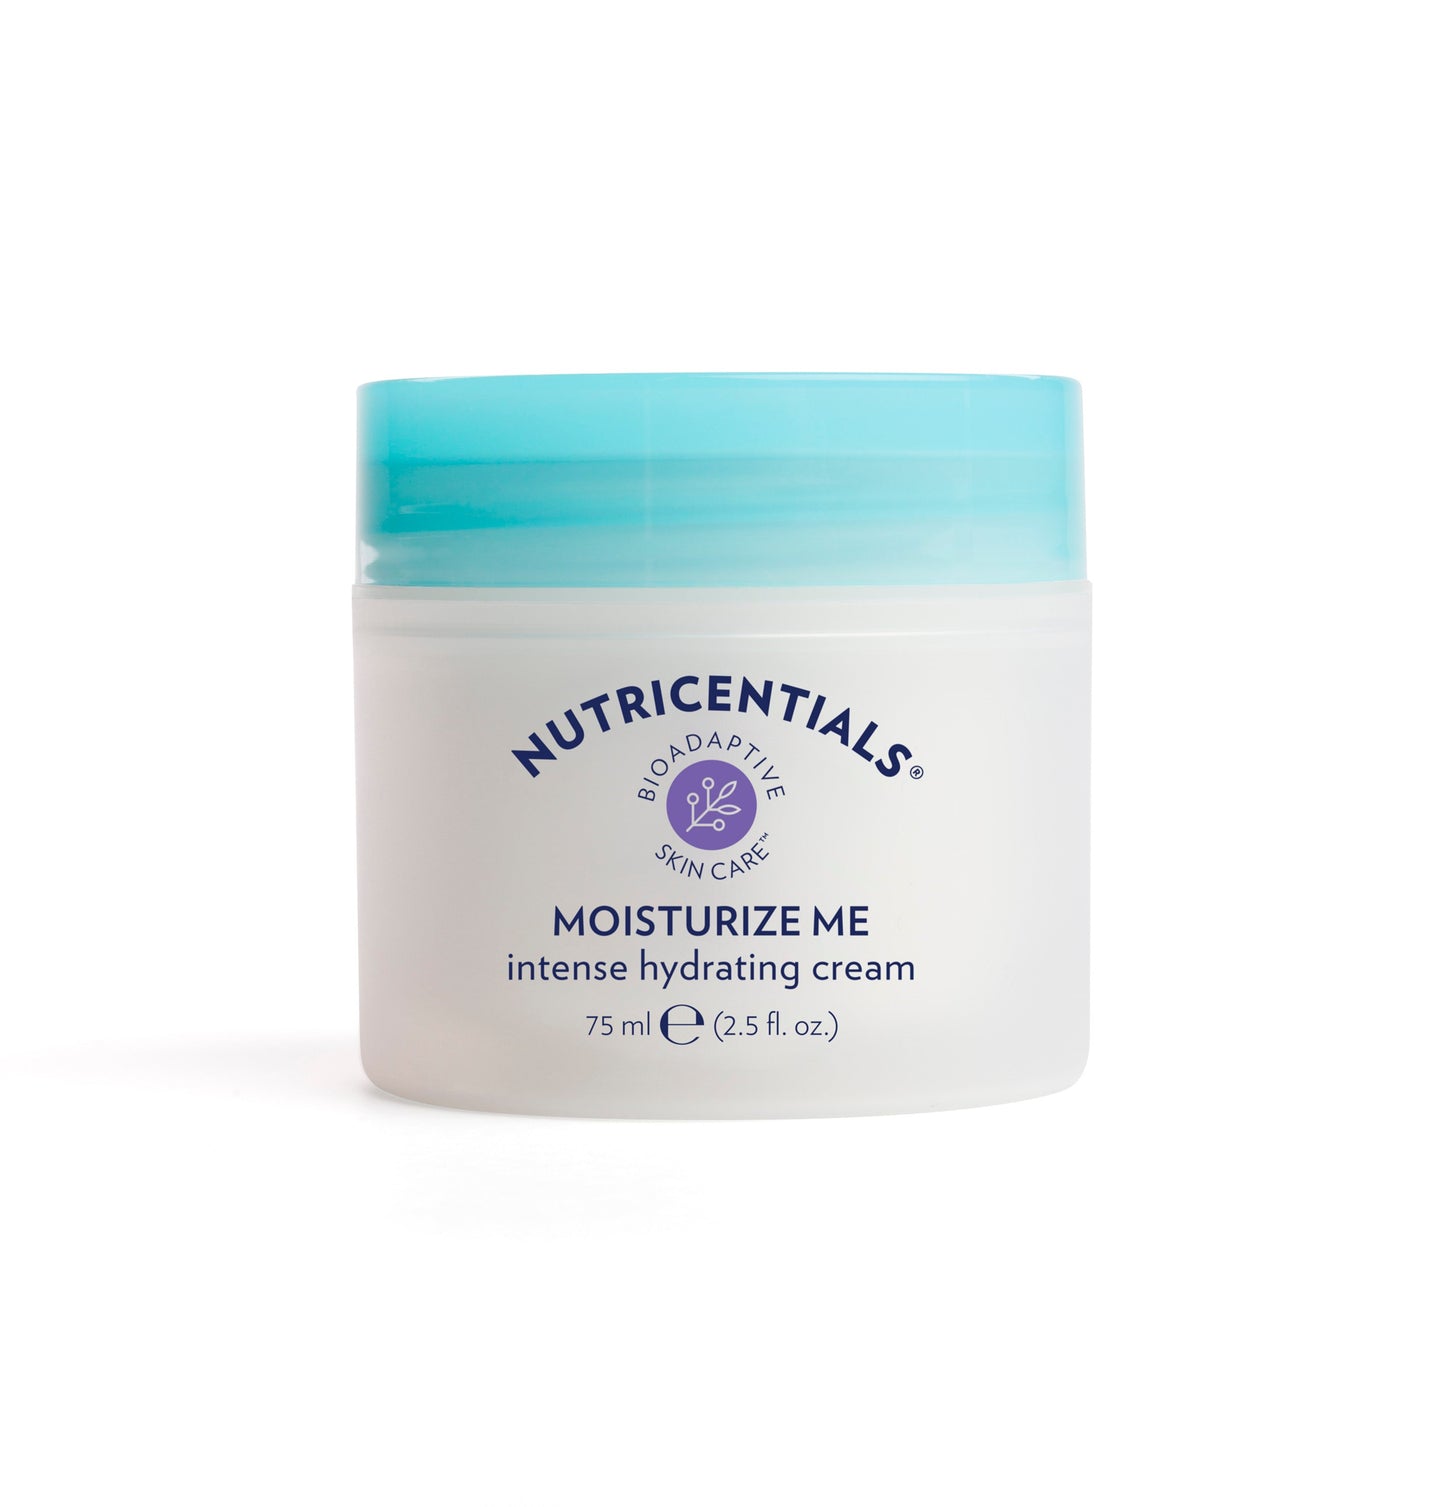 Moisturize Me Intense Hydrating Cream by Nu Skin